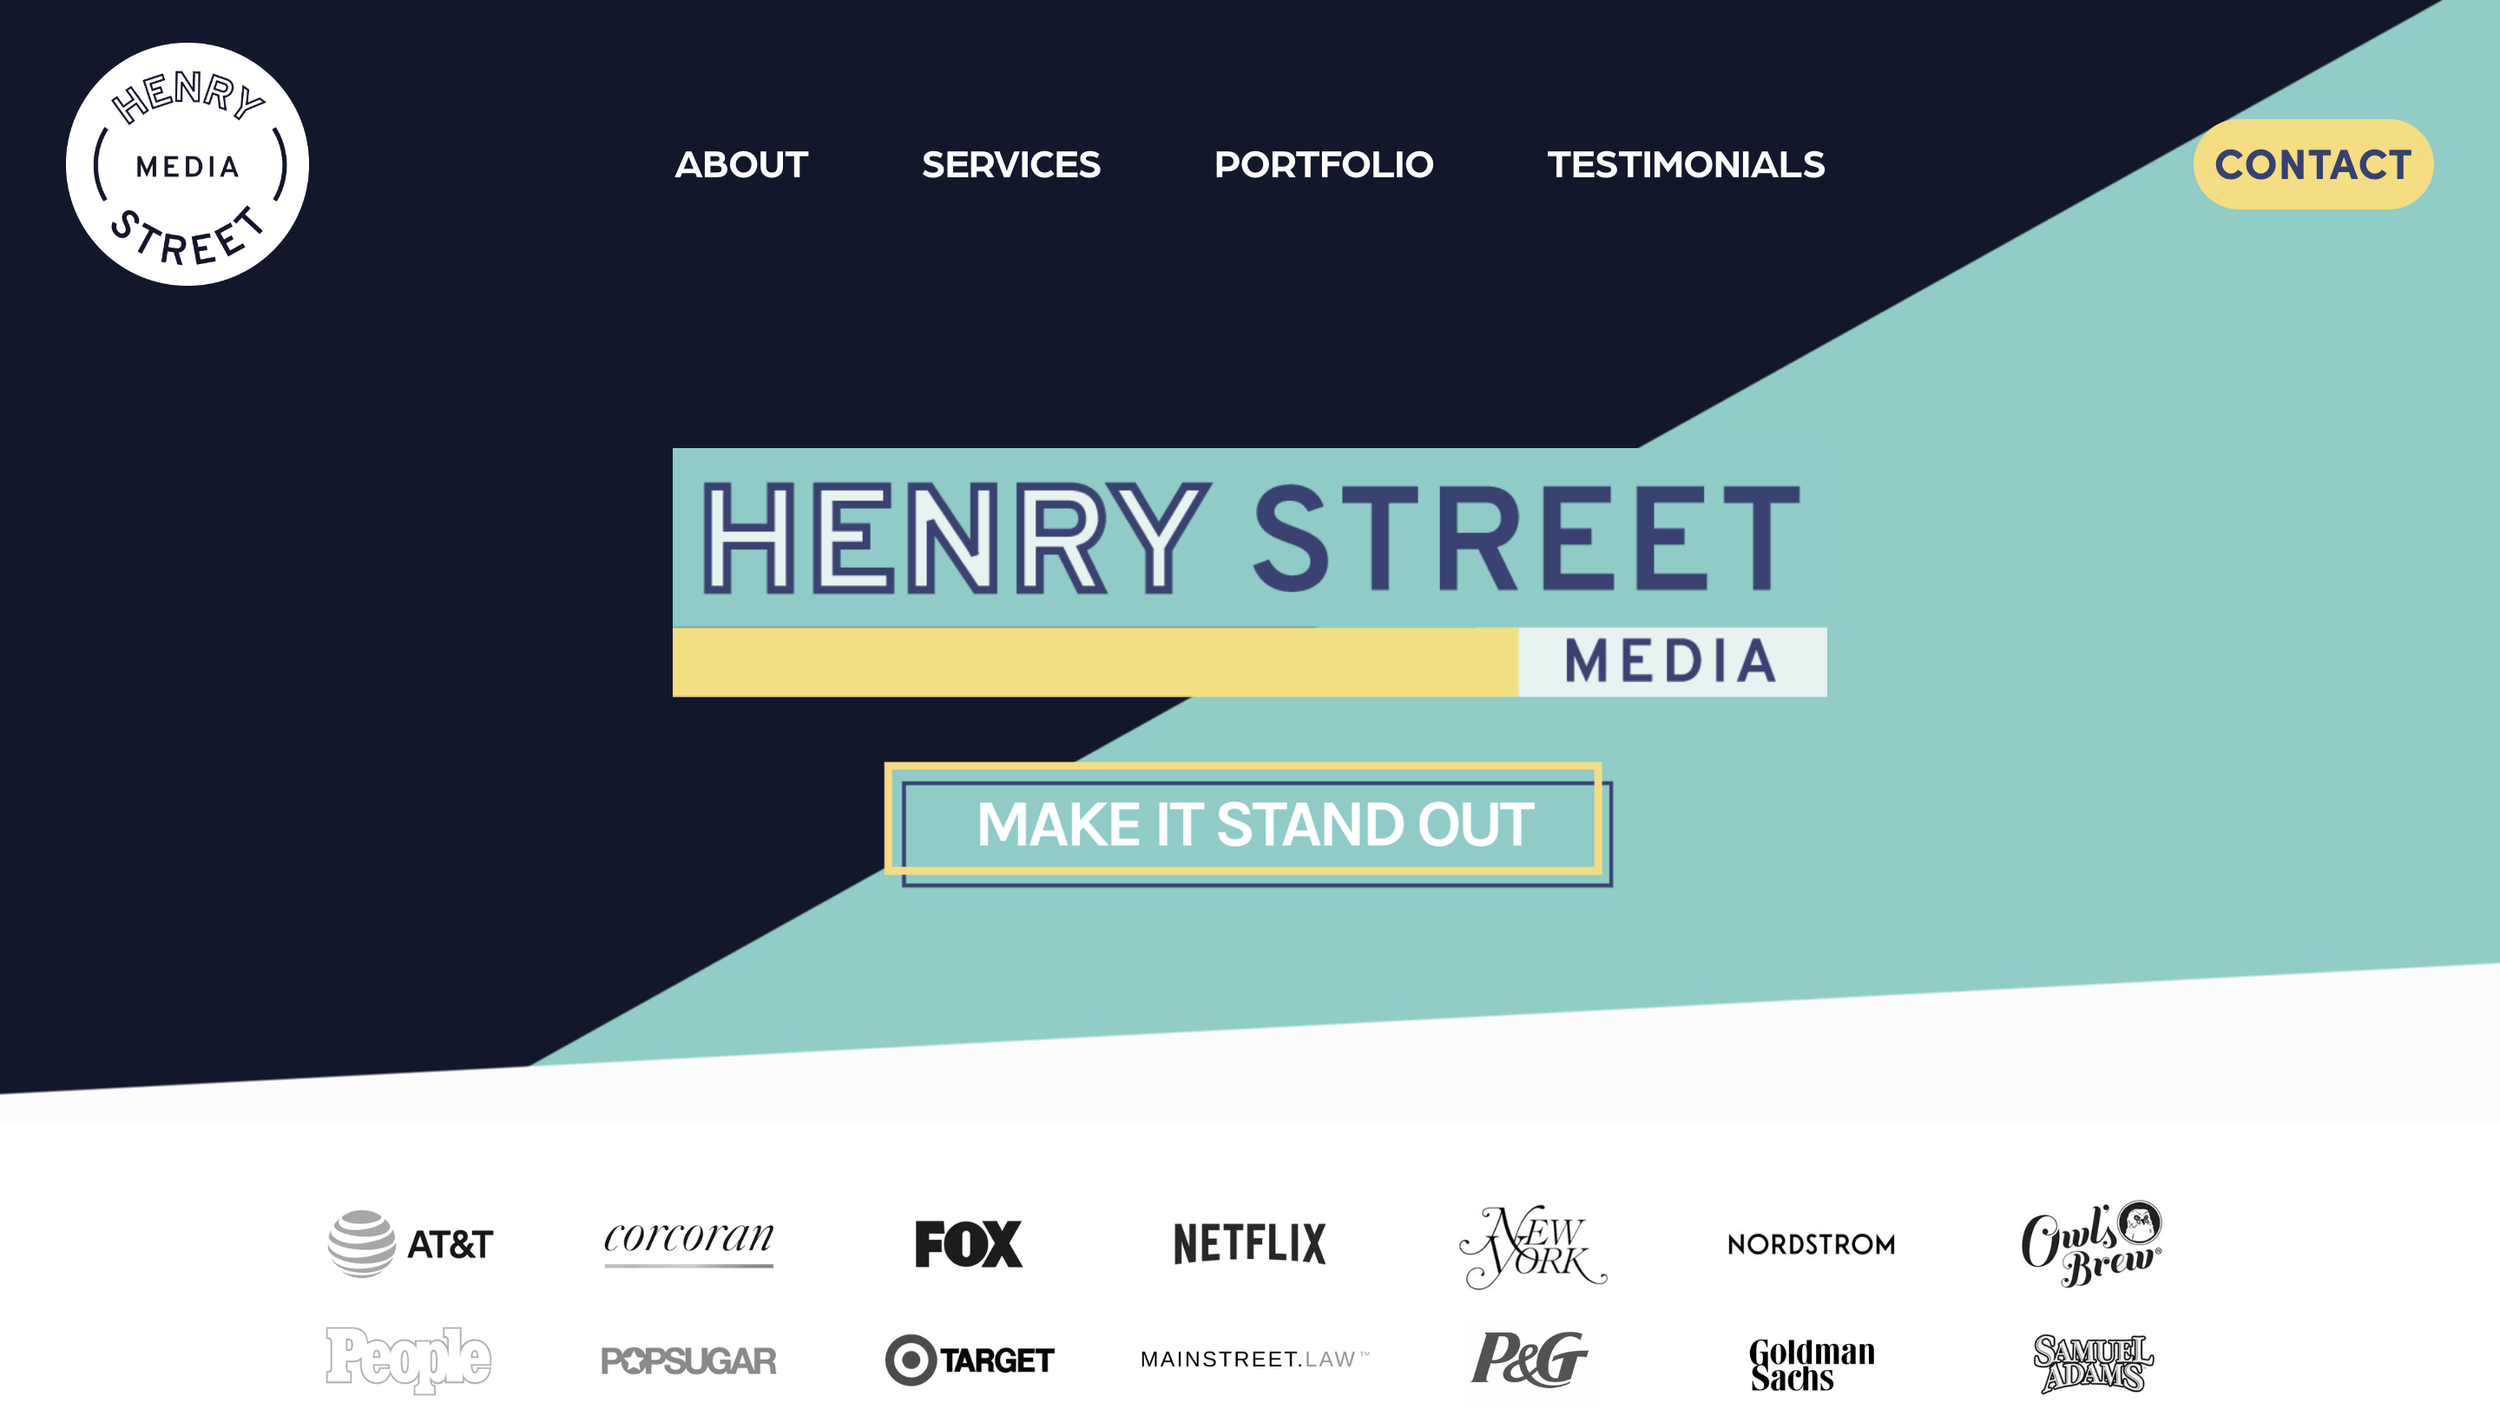 Henry Street Media • Kim Rittberg's Media Company